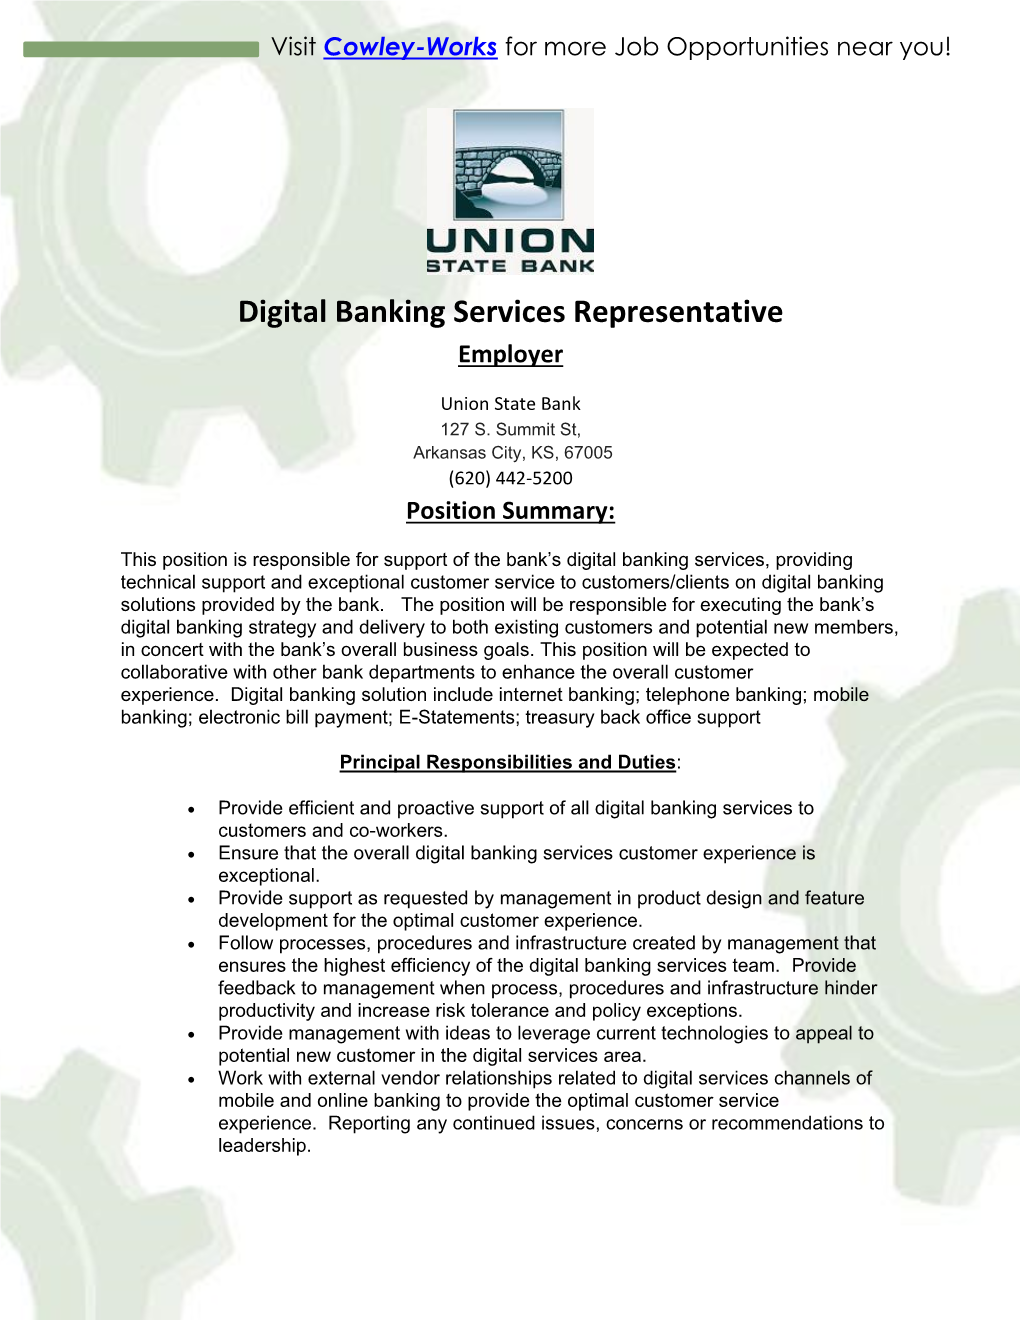 Digital Banking Services Representative Employer